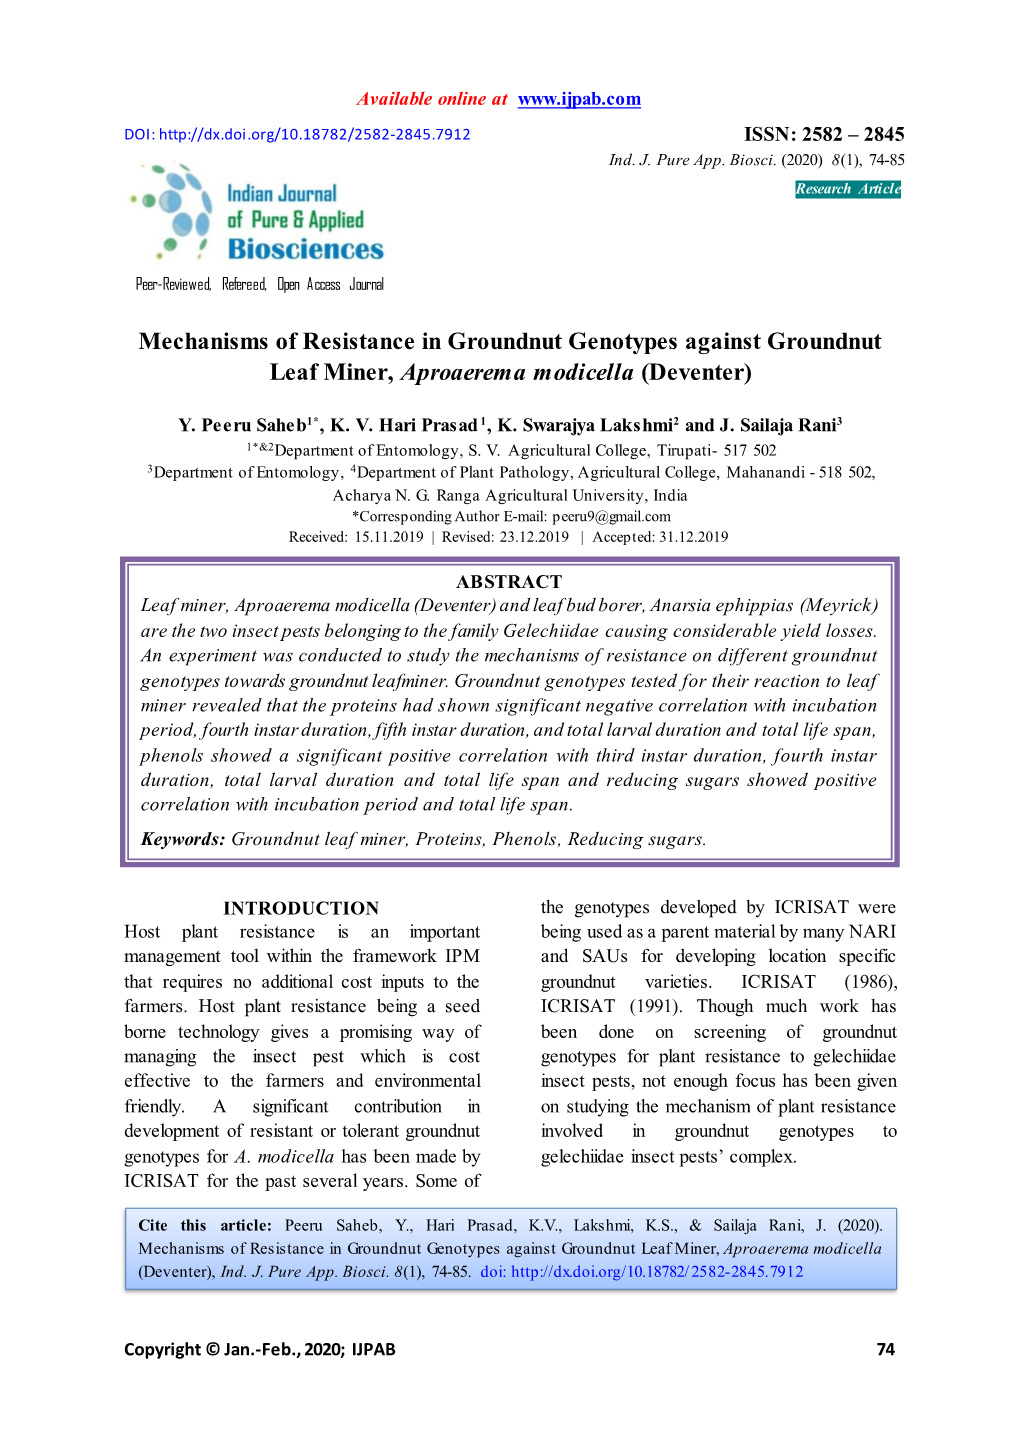 Mechanisms of Resistance in Groundnut Genotypes Against Groundnut Leaf Miner, Aproaerema Modicella (Deventer)